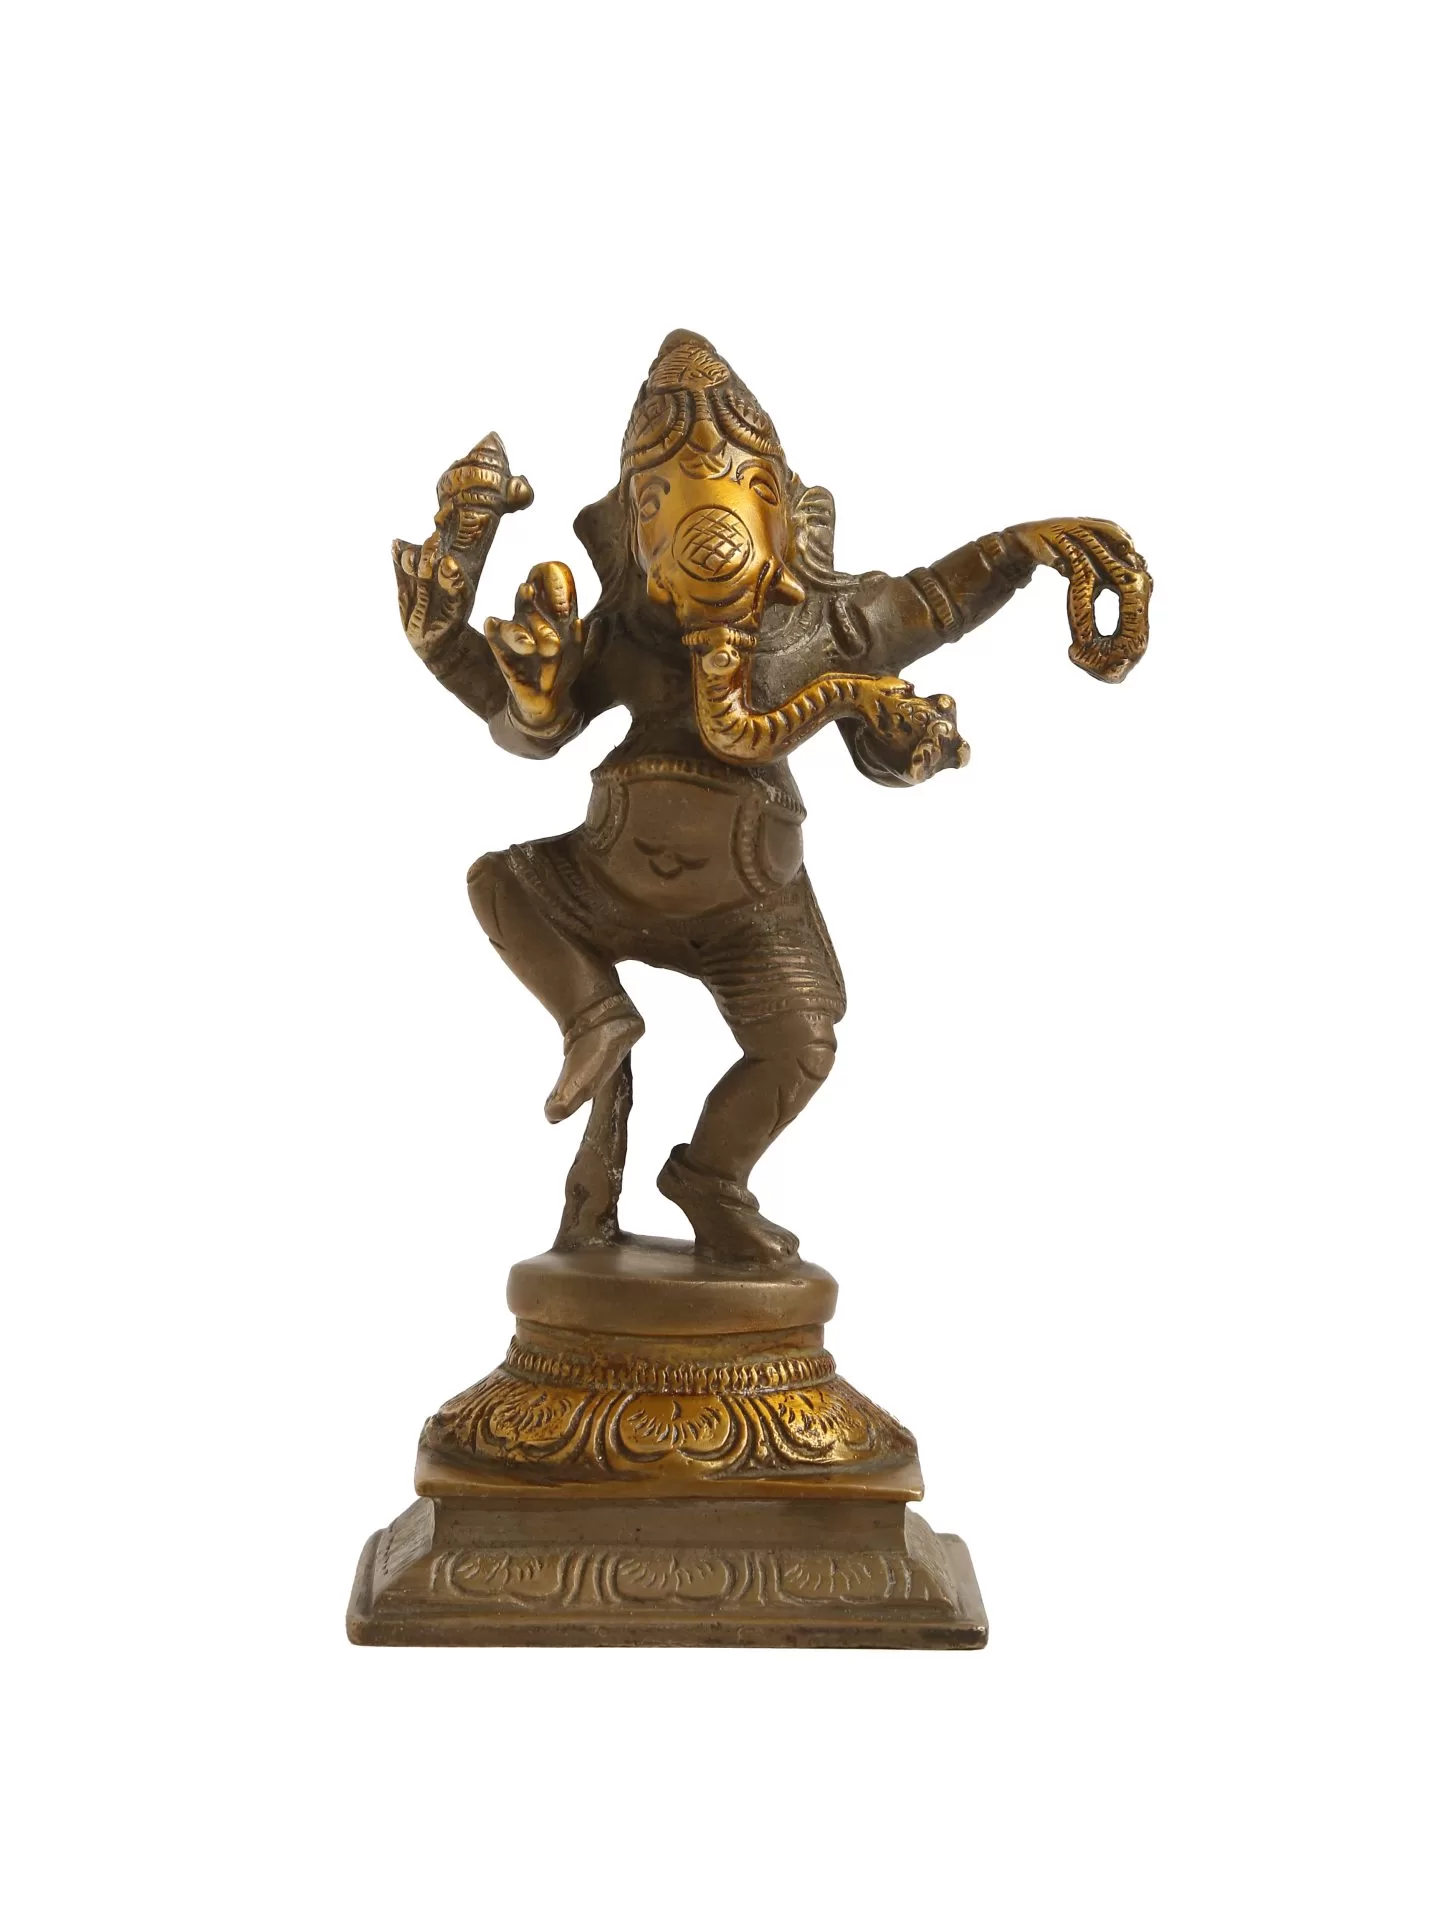 Kratidecor Ethnic Indian Handcrafted Brass Dancing Ganesha Temple